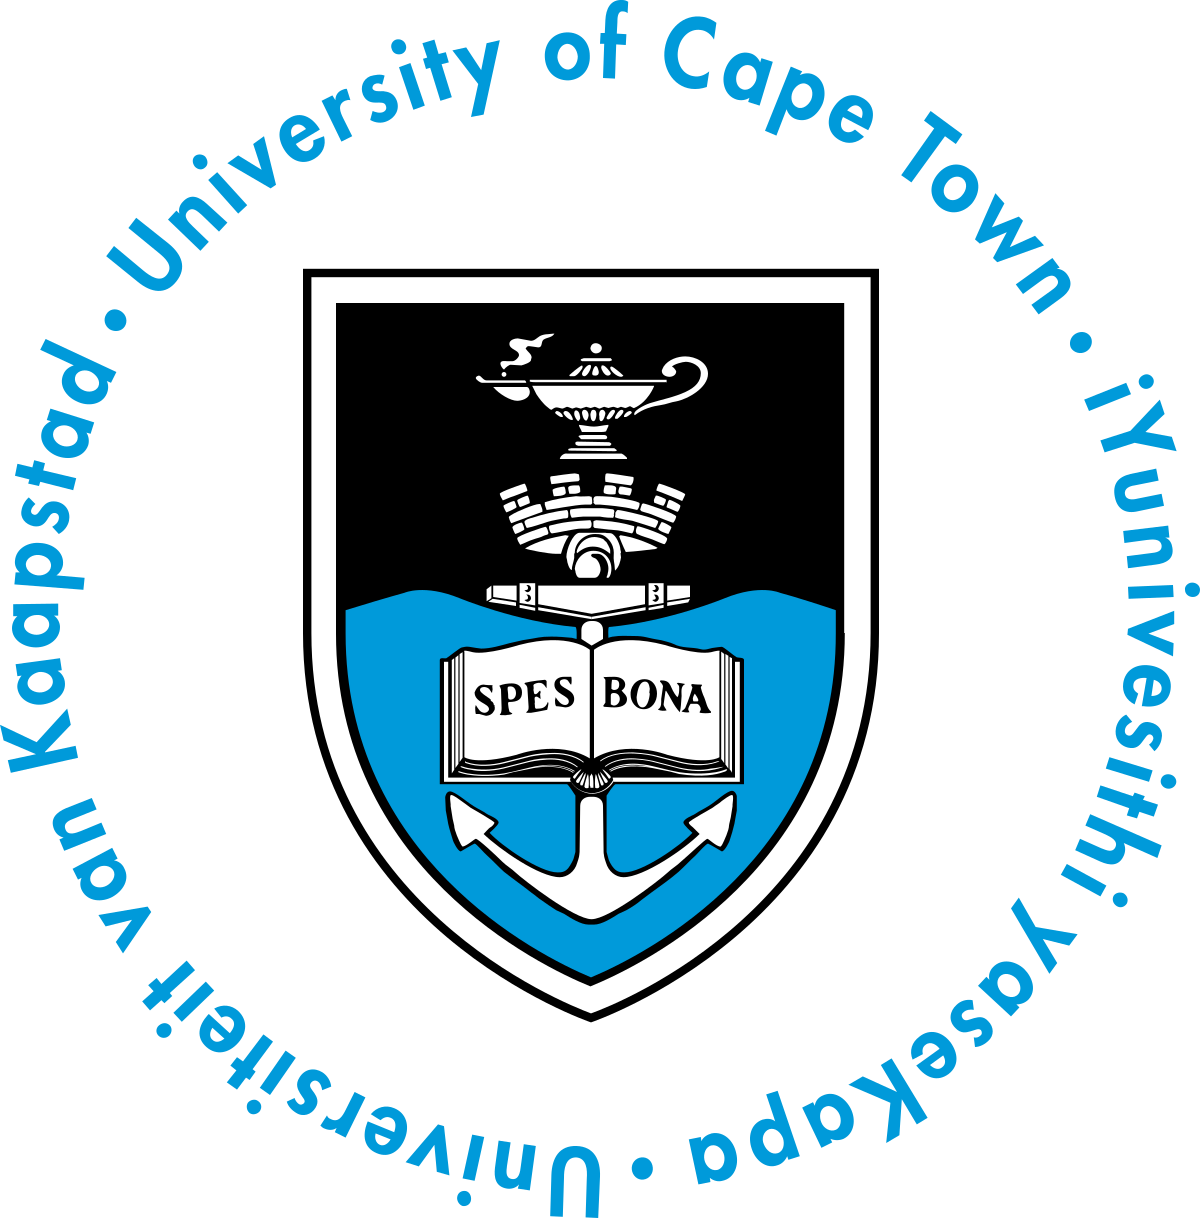 University of Cape Town logo.